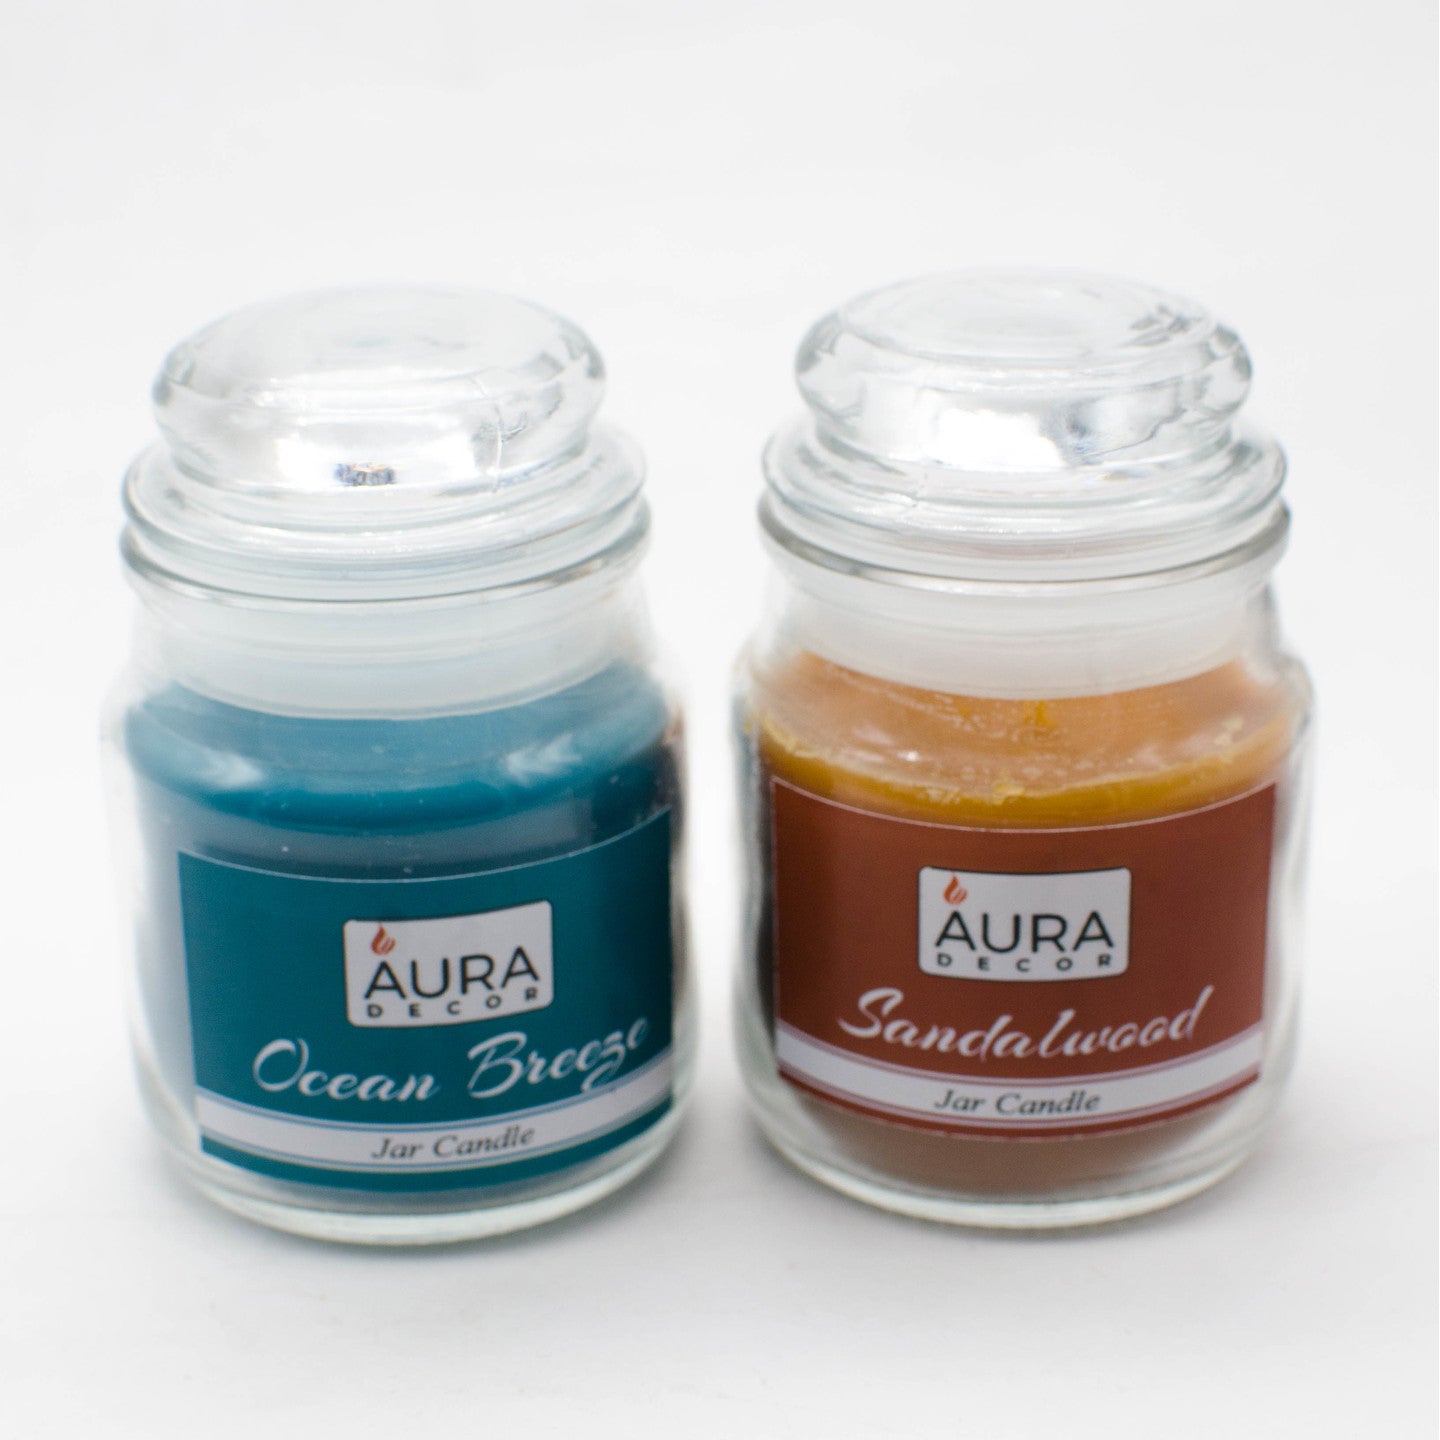 AuraDecor Set of 2 Fragrance Jar Ocean Breeze & Sandalwood ( Burning Time 30 hours Each ) - auradecor.co.in